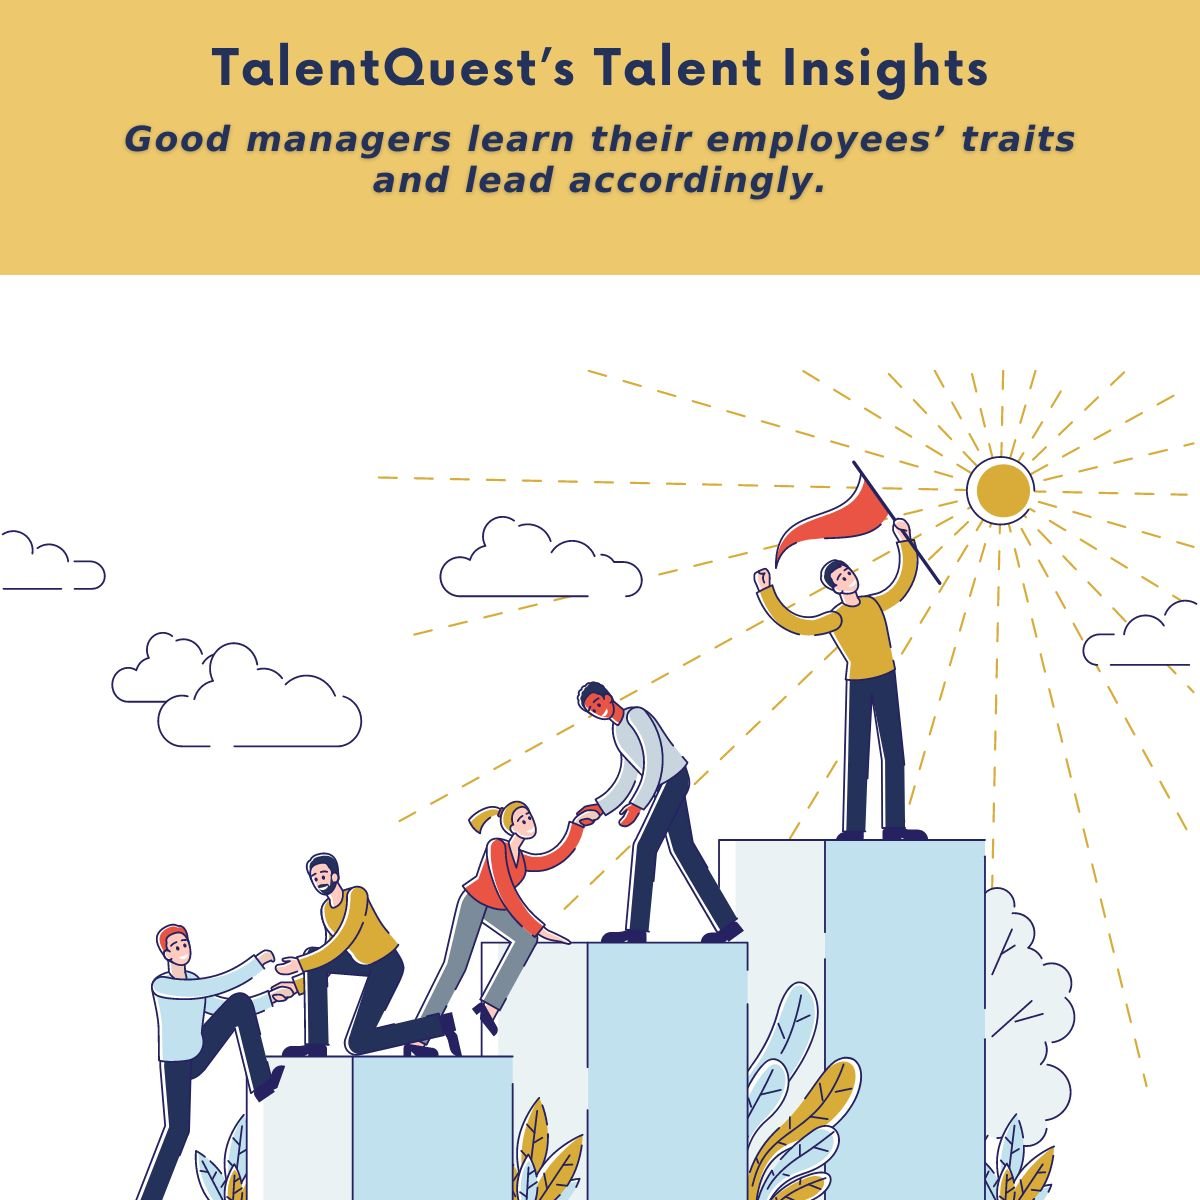 Good managers unlock potential. But how? ️‍TalentQuest's Talent Insights reveal employee traits & preferences, fueling effective leadership & unleashing team success. #EmployeeInsights #LeadershipSkills #TalentDevelopment #TalentQuest